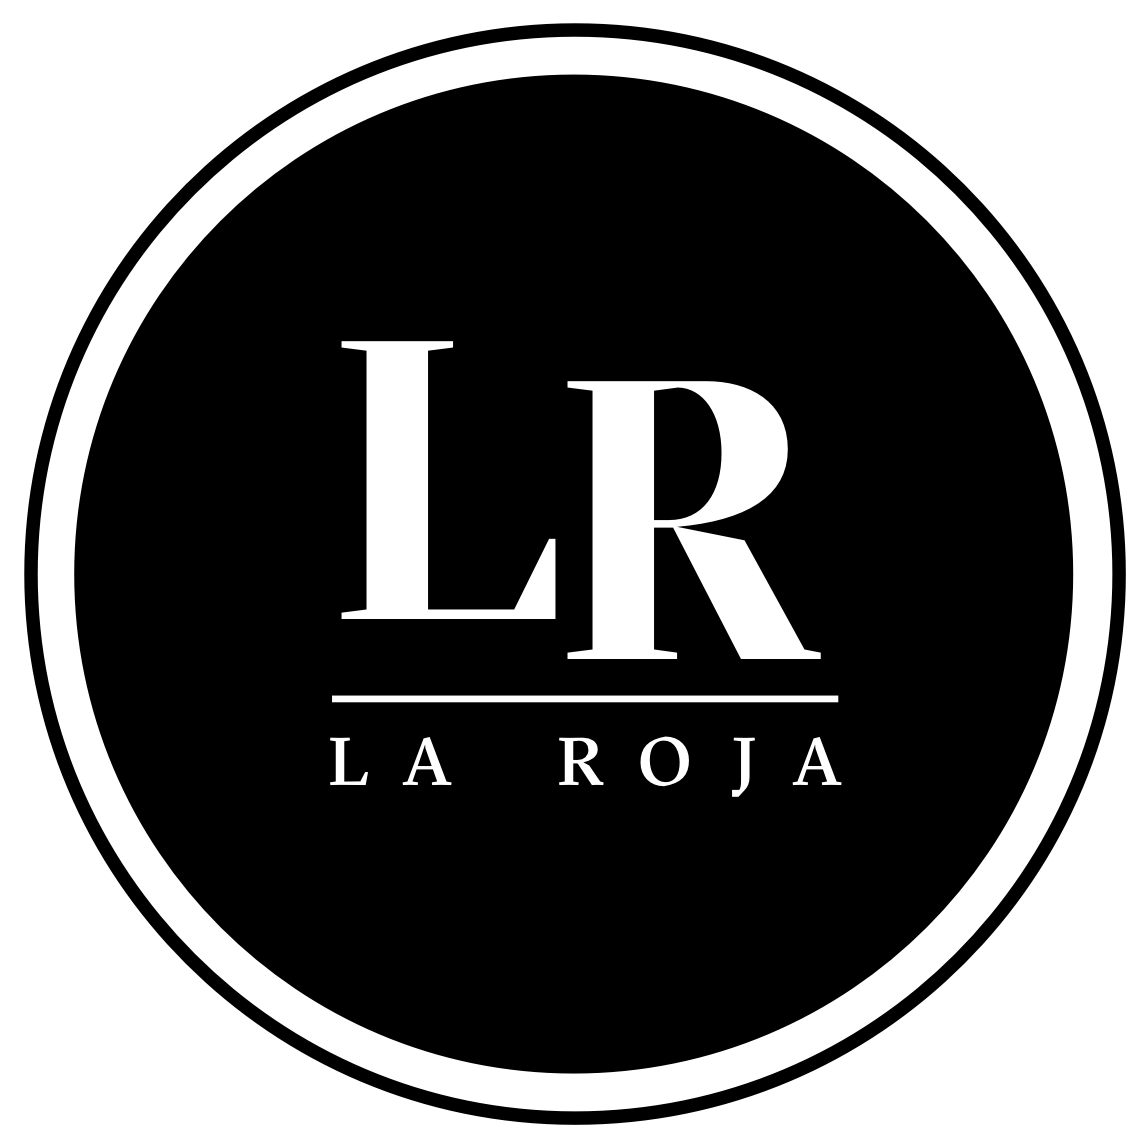 Distillerie La Roja